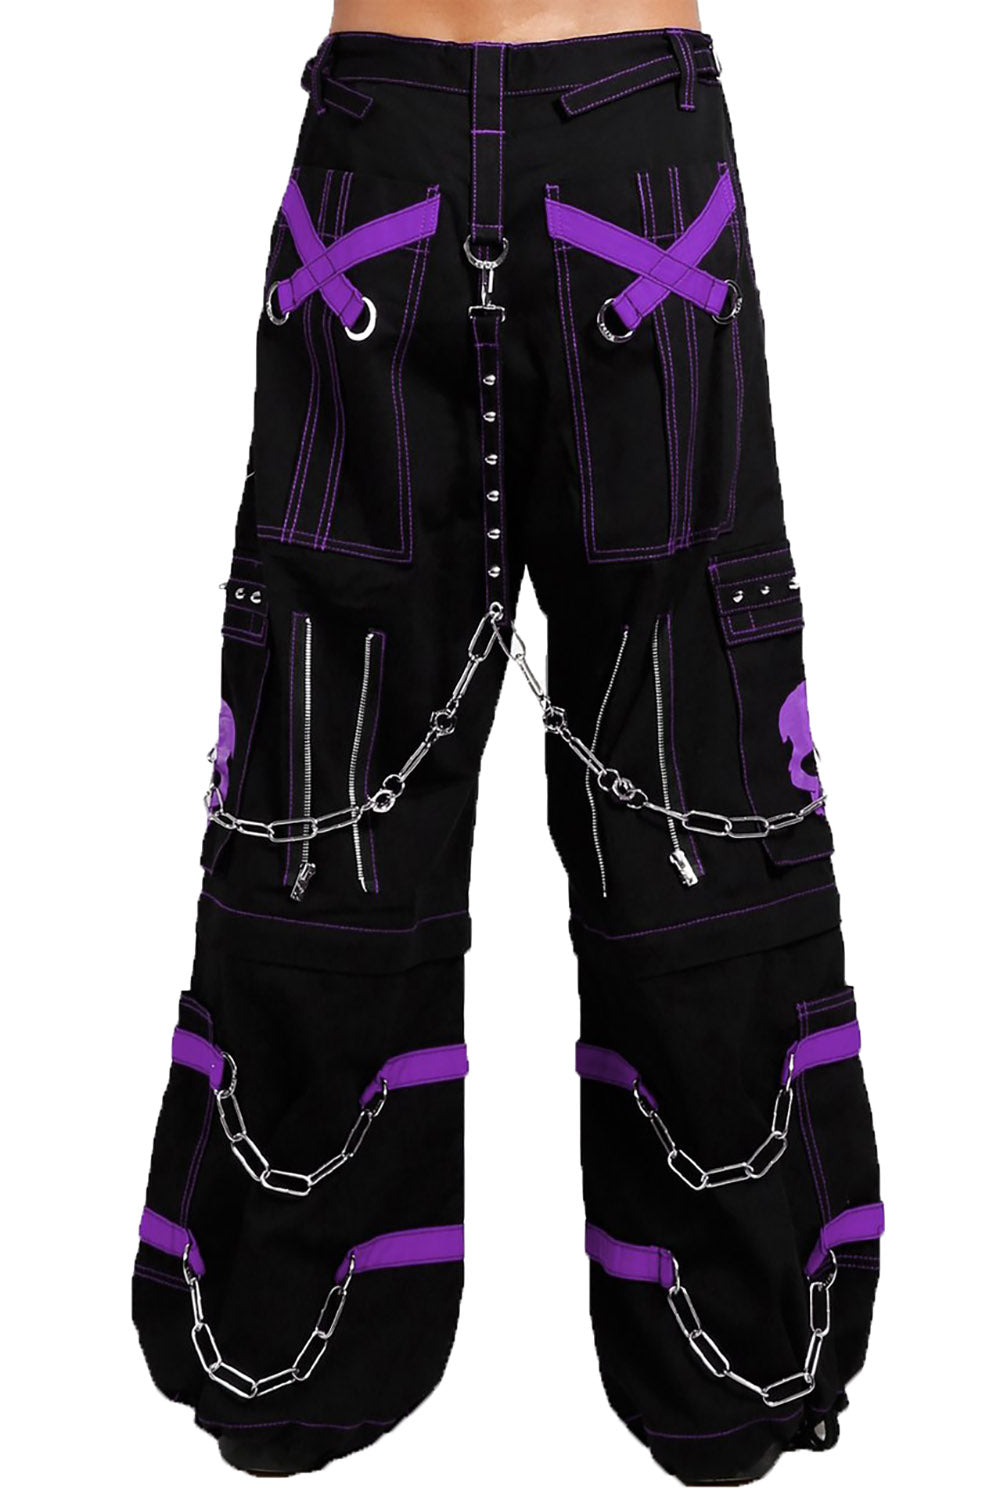 Tripp NYC - Enchanted Black/Purple - Pants